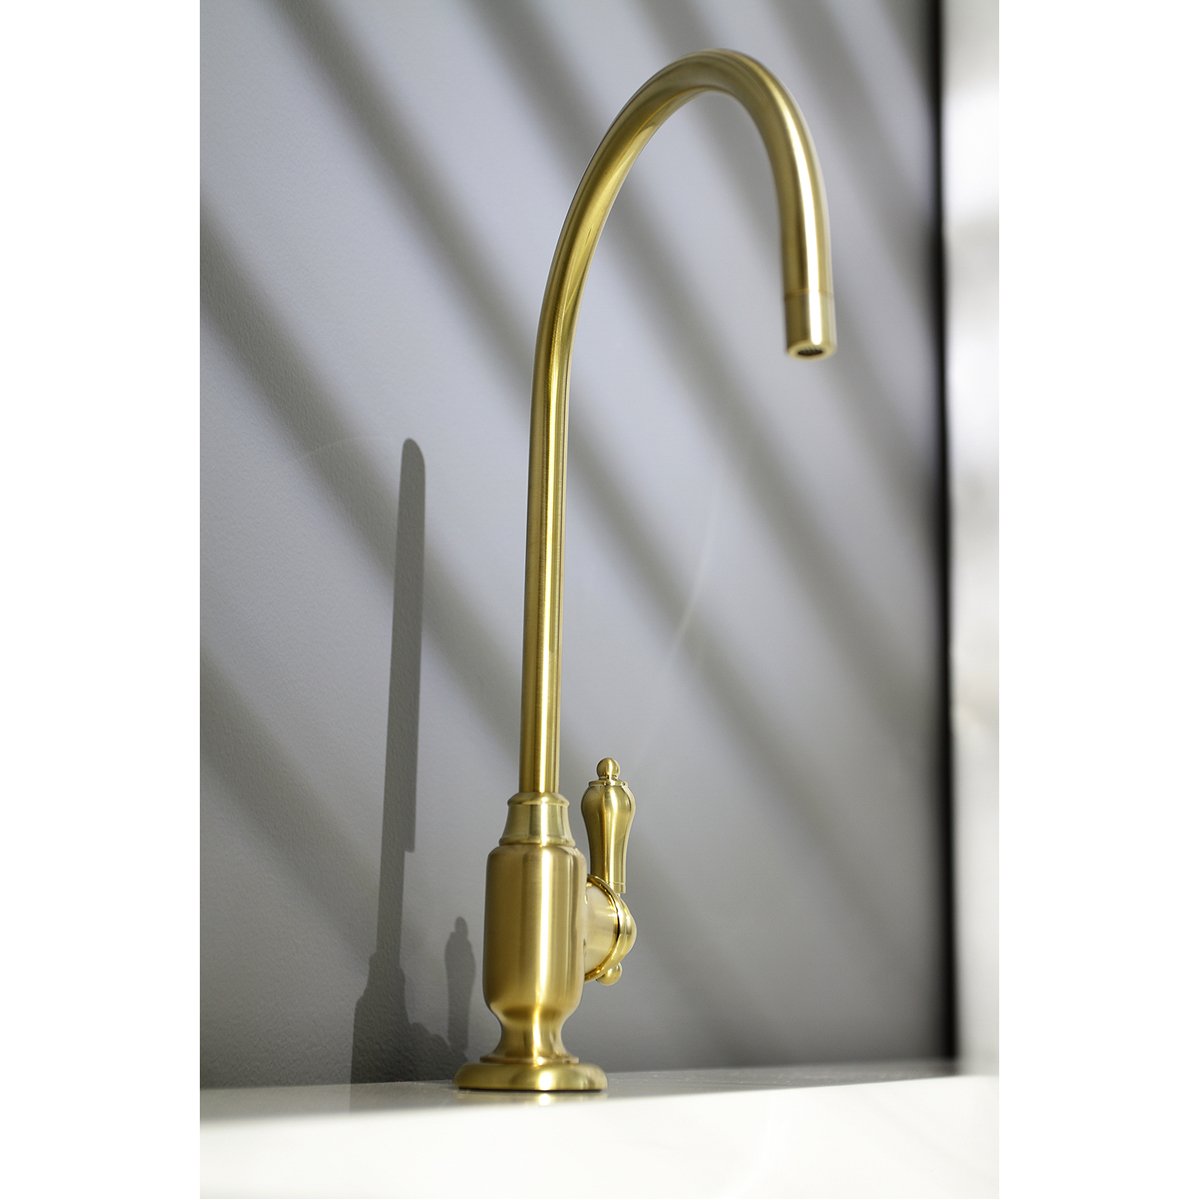 Kingston Brass Heirloom Single-Handle Water Filtration Faucet